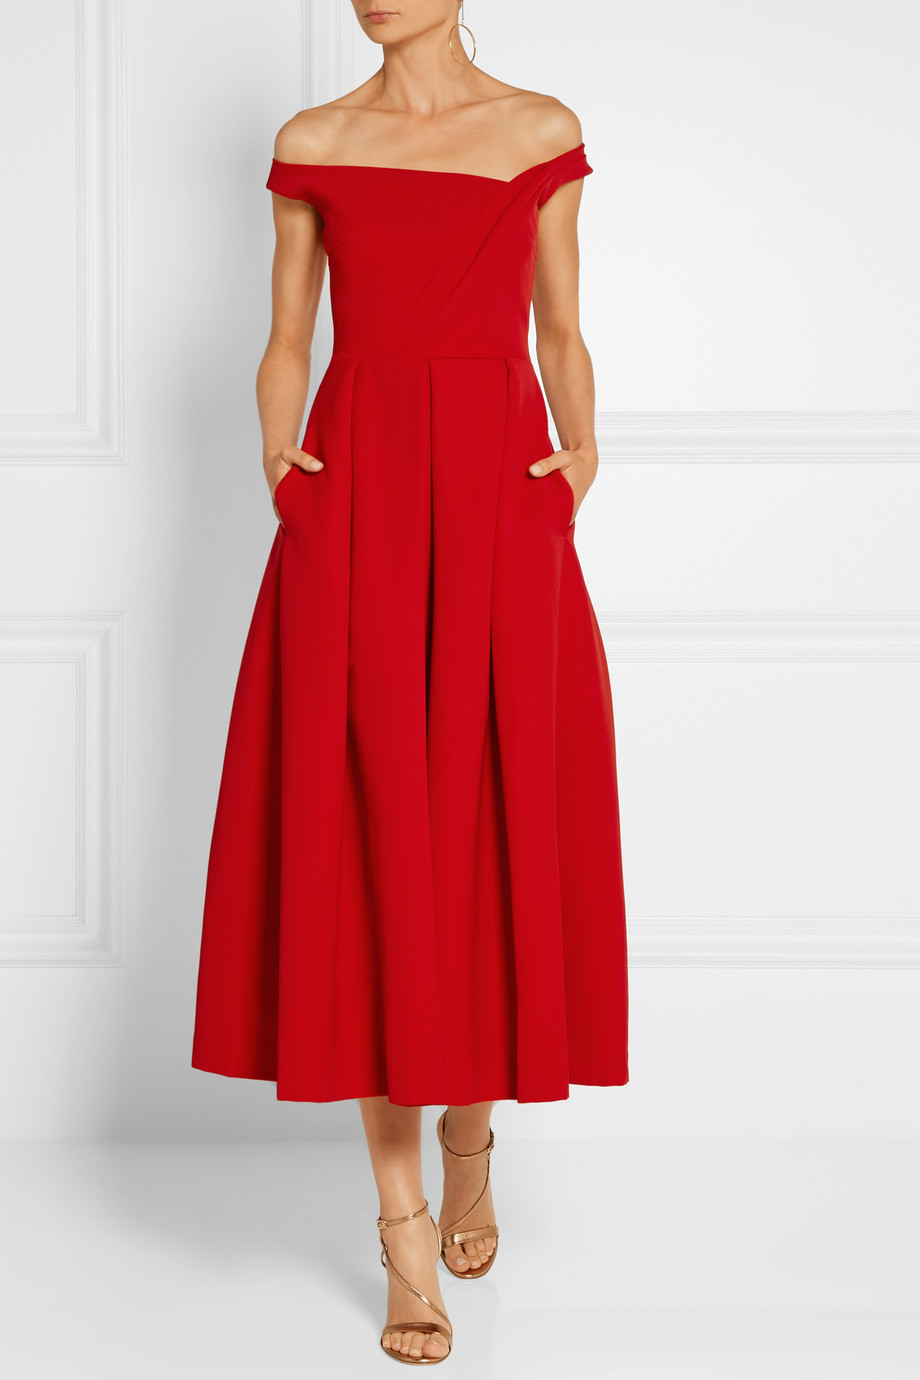 preen-finella-dress-red-1.jpg